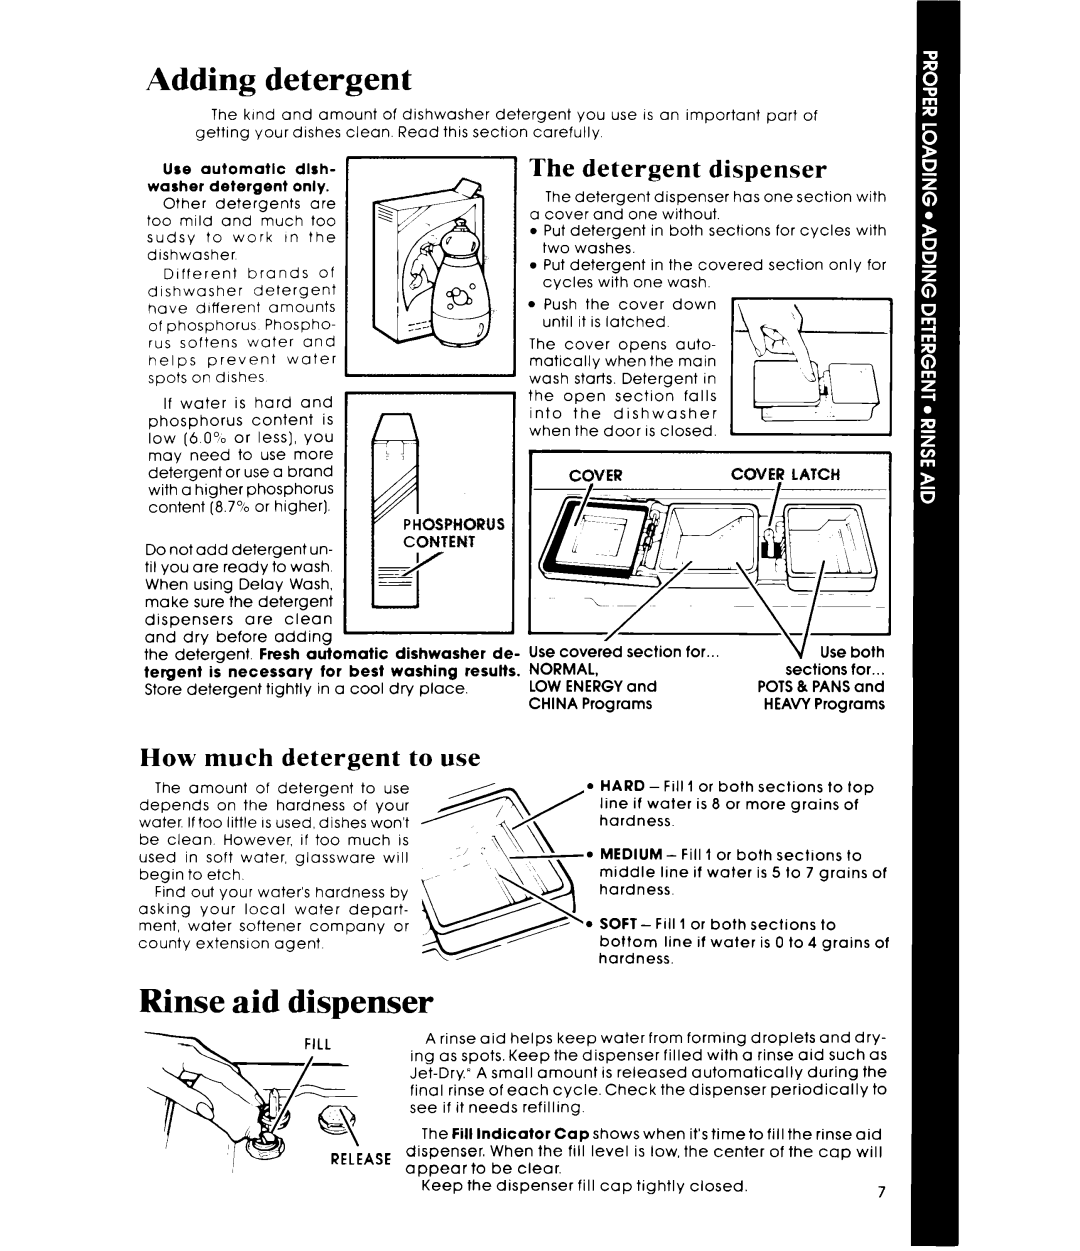 Whirlpool DU9700XT manual Adding detergent, Rinse aid dispenser, The detergent dispenser, How much detergent to use 